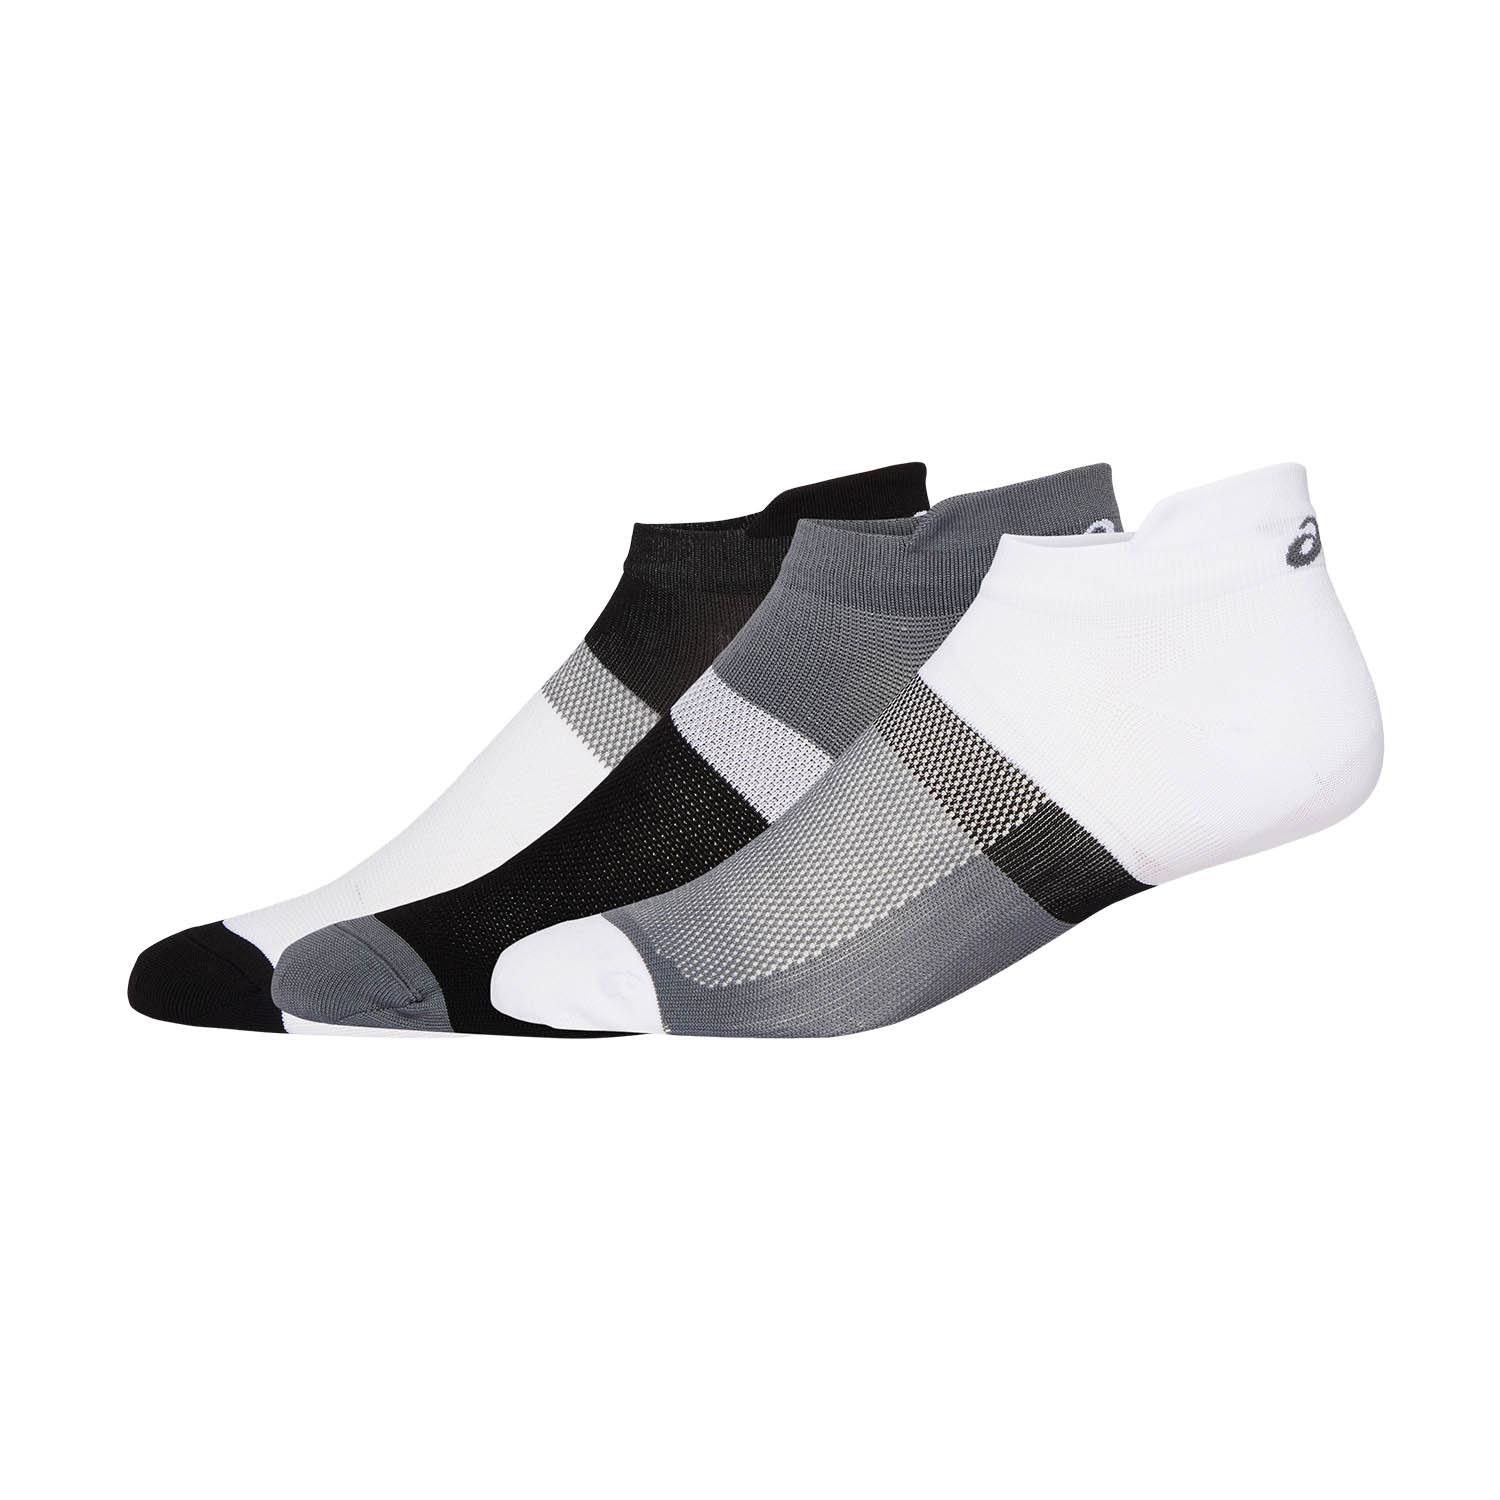 Asics Lightweight Color Block x 3 Socks - Performance Black